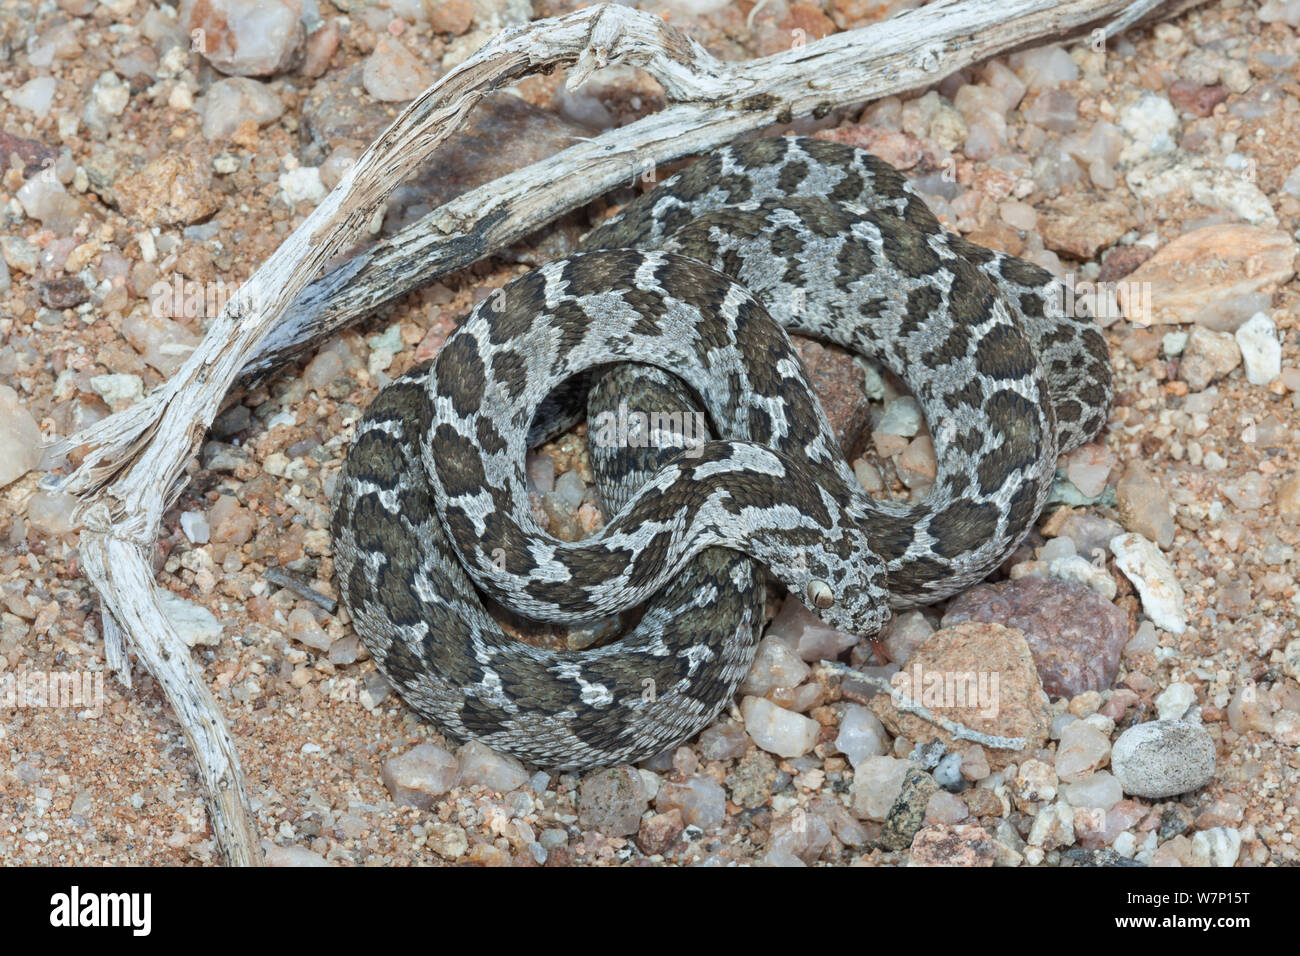 Common, or rhombic, egg-eating snake, (Dasypeltis scabra). Near Springbok, South Africa, October. Stock Photo